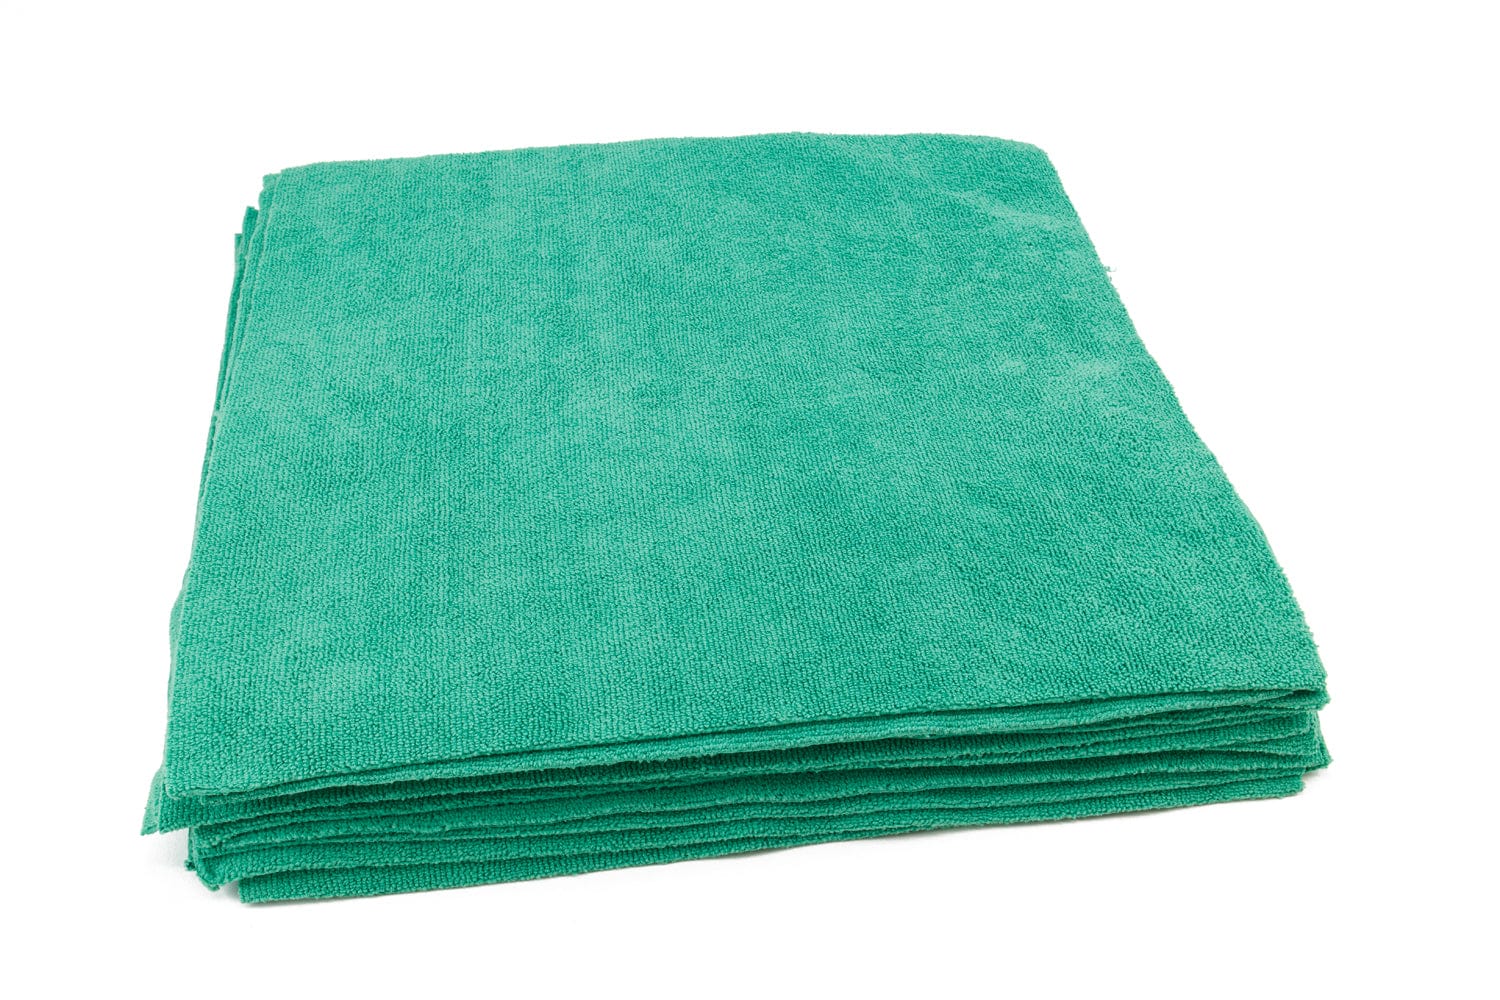 Autofiber Towel FULL CASE [Utility 400v] Edgeless Microfiber Cleaning Towel 16"x16" - 200/case